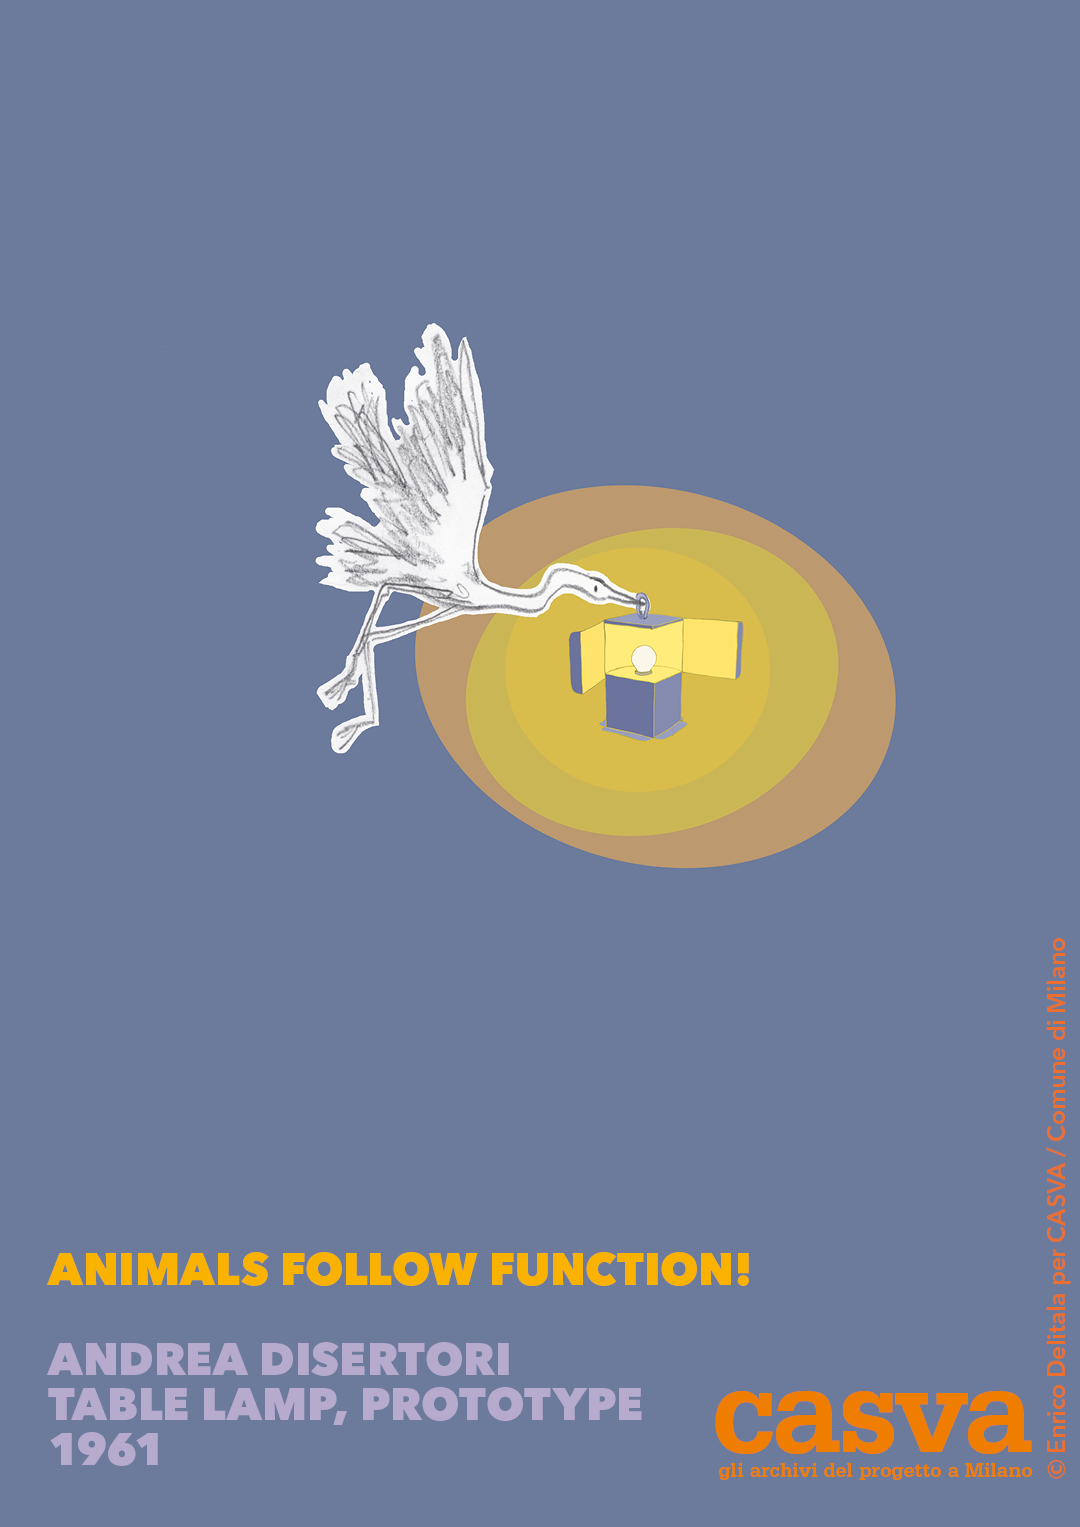 Airone: Enrico Delitala illustrator animals follow function form follows function CASVA Andrea Disertori